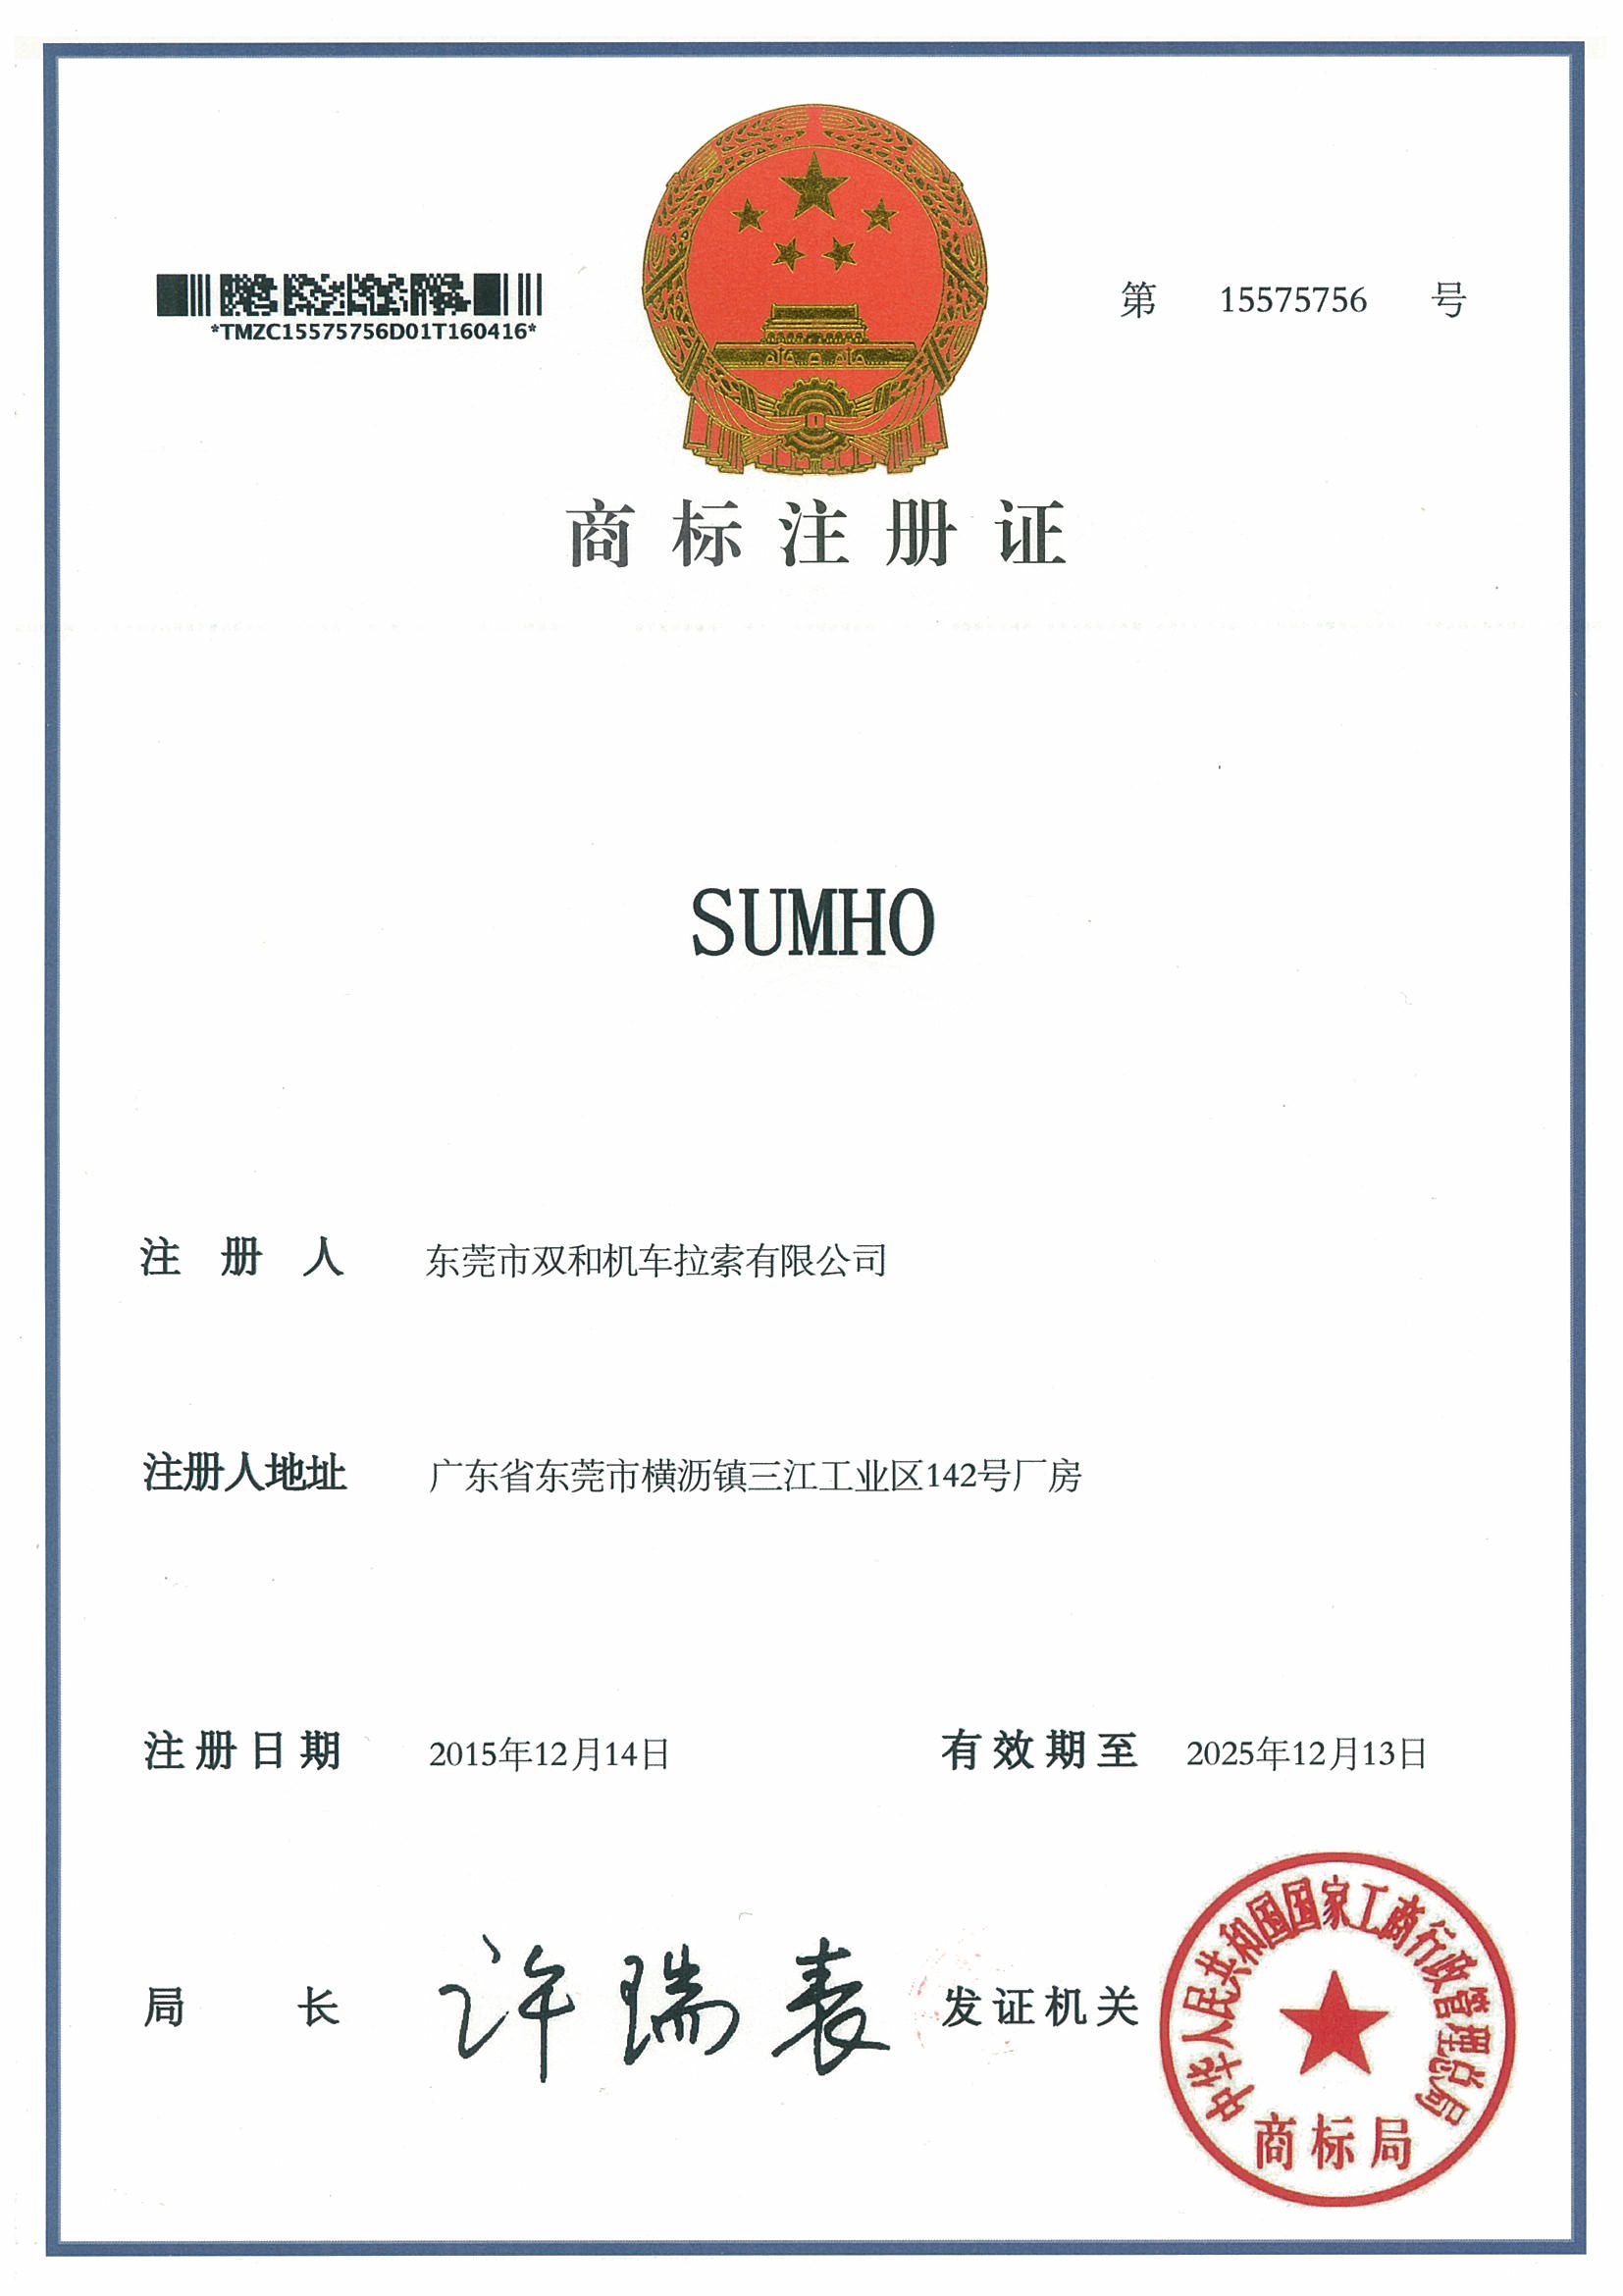 SUMHO Trademark